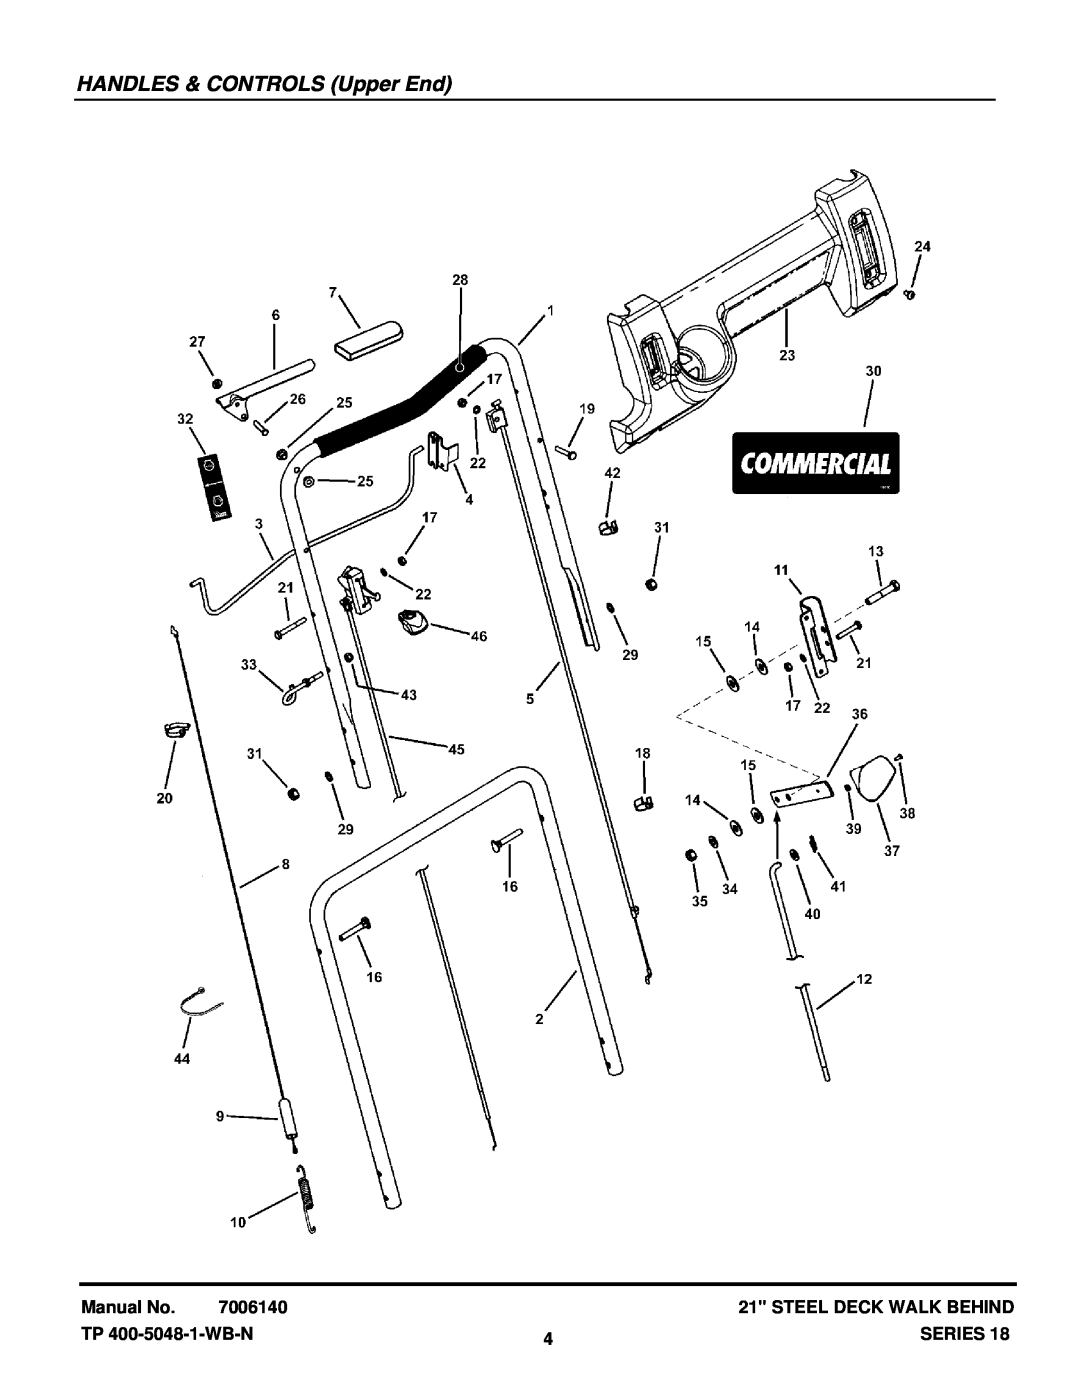 Snapper CP215518HV HANDLES & CONTROLS Upper End, Manual No, 7006140, Steel Deck Walk Behind, TP 400-5048-1-WB-N, Series 